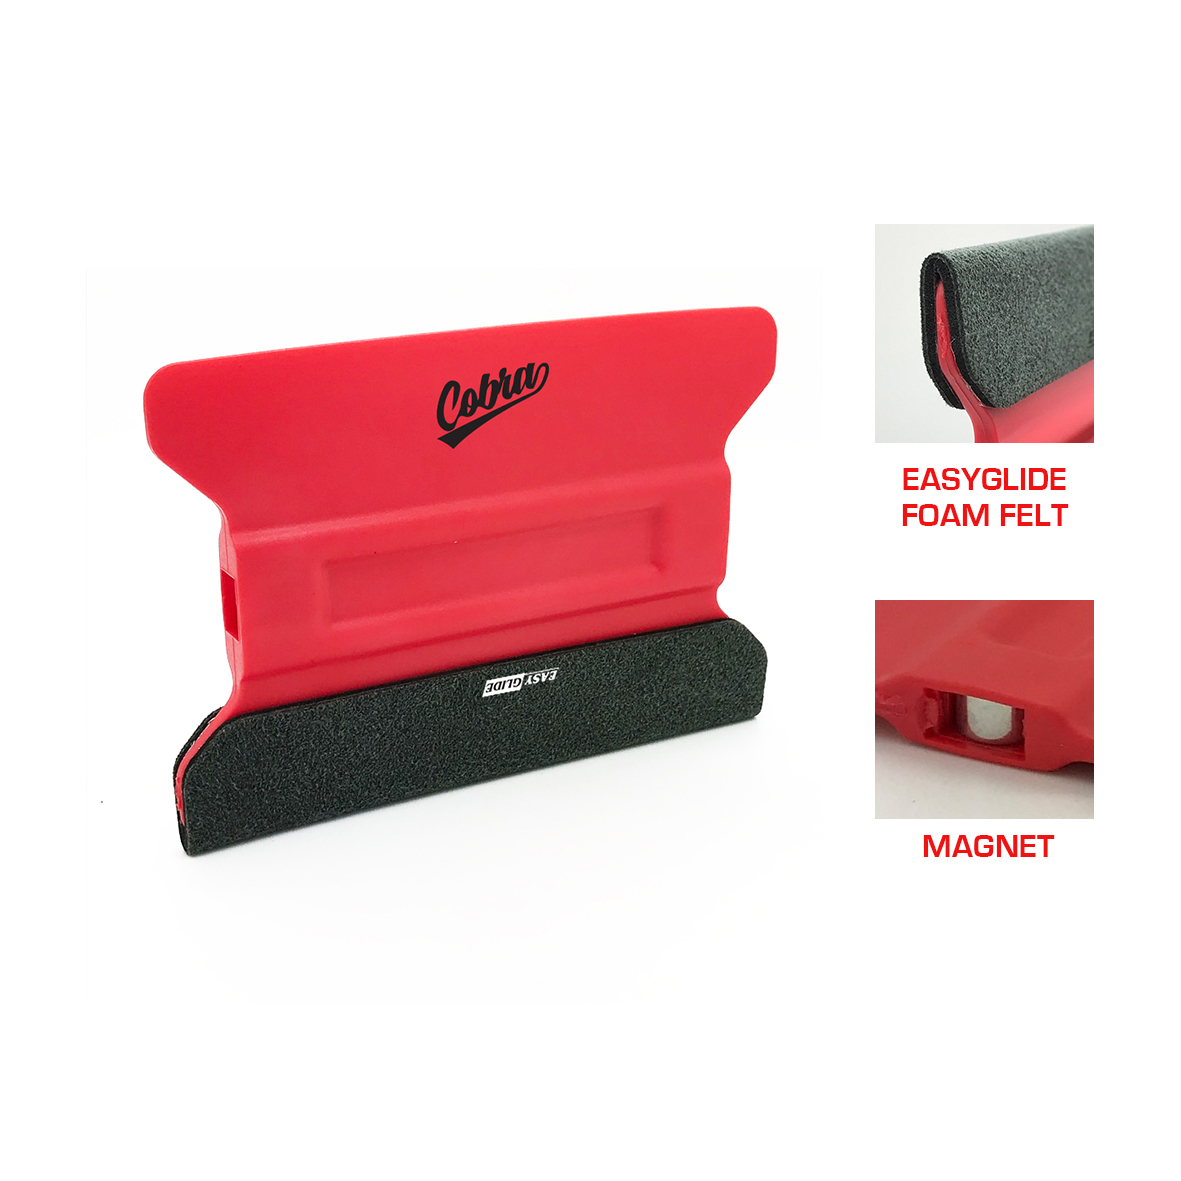 Cobra Speedwing Magnet Squeegee (Flex Firm) with Easy Glide Foam Felt  Online USA.